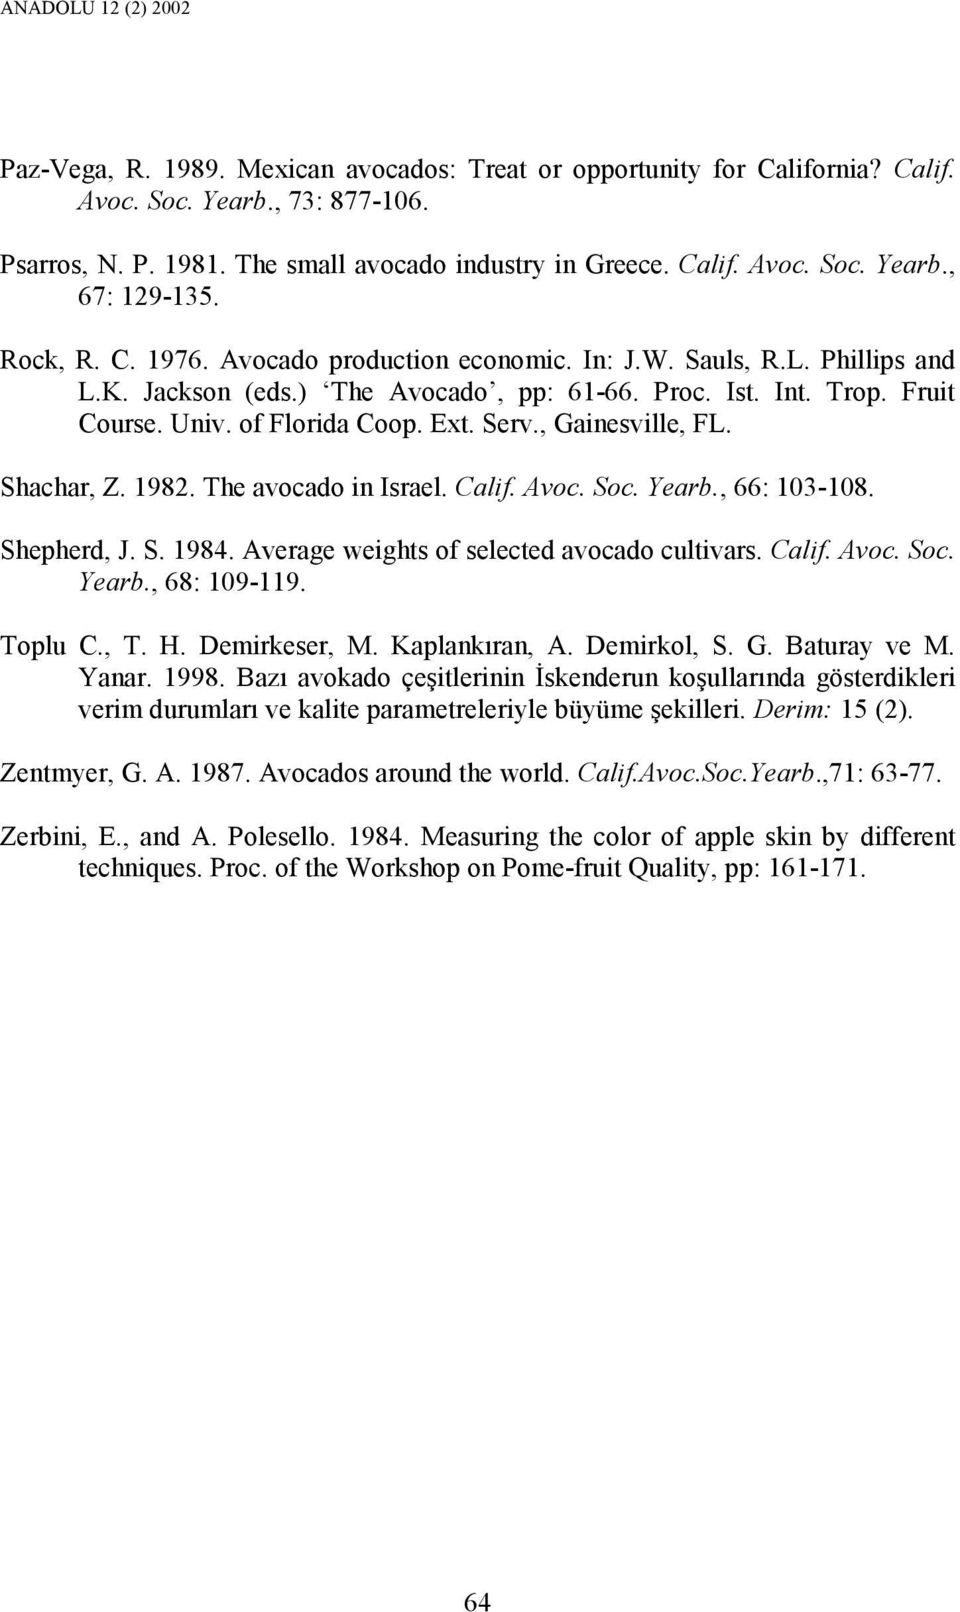 , Gainesville, FL. Shachar, Z. 1982. The avocado in Israel. Calif. Avoc. Soc. Yearb., 66: 103-108. Shepherd, J. S. 1984. Average weights of selected avocado cultivars. Calif. Avoc. Soc. Yearb., 68: 109-119.